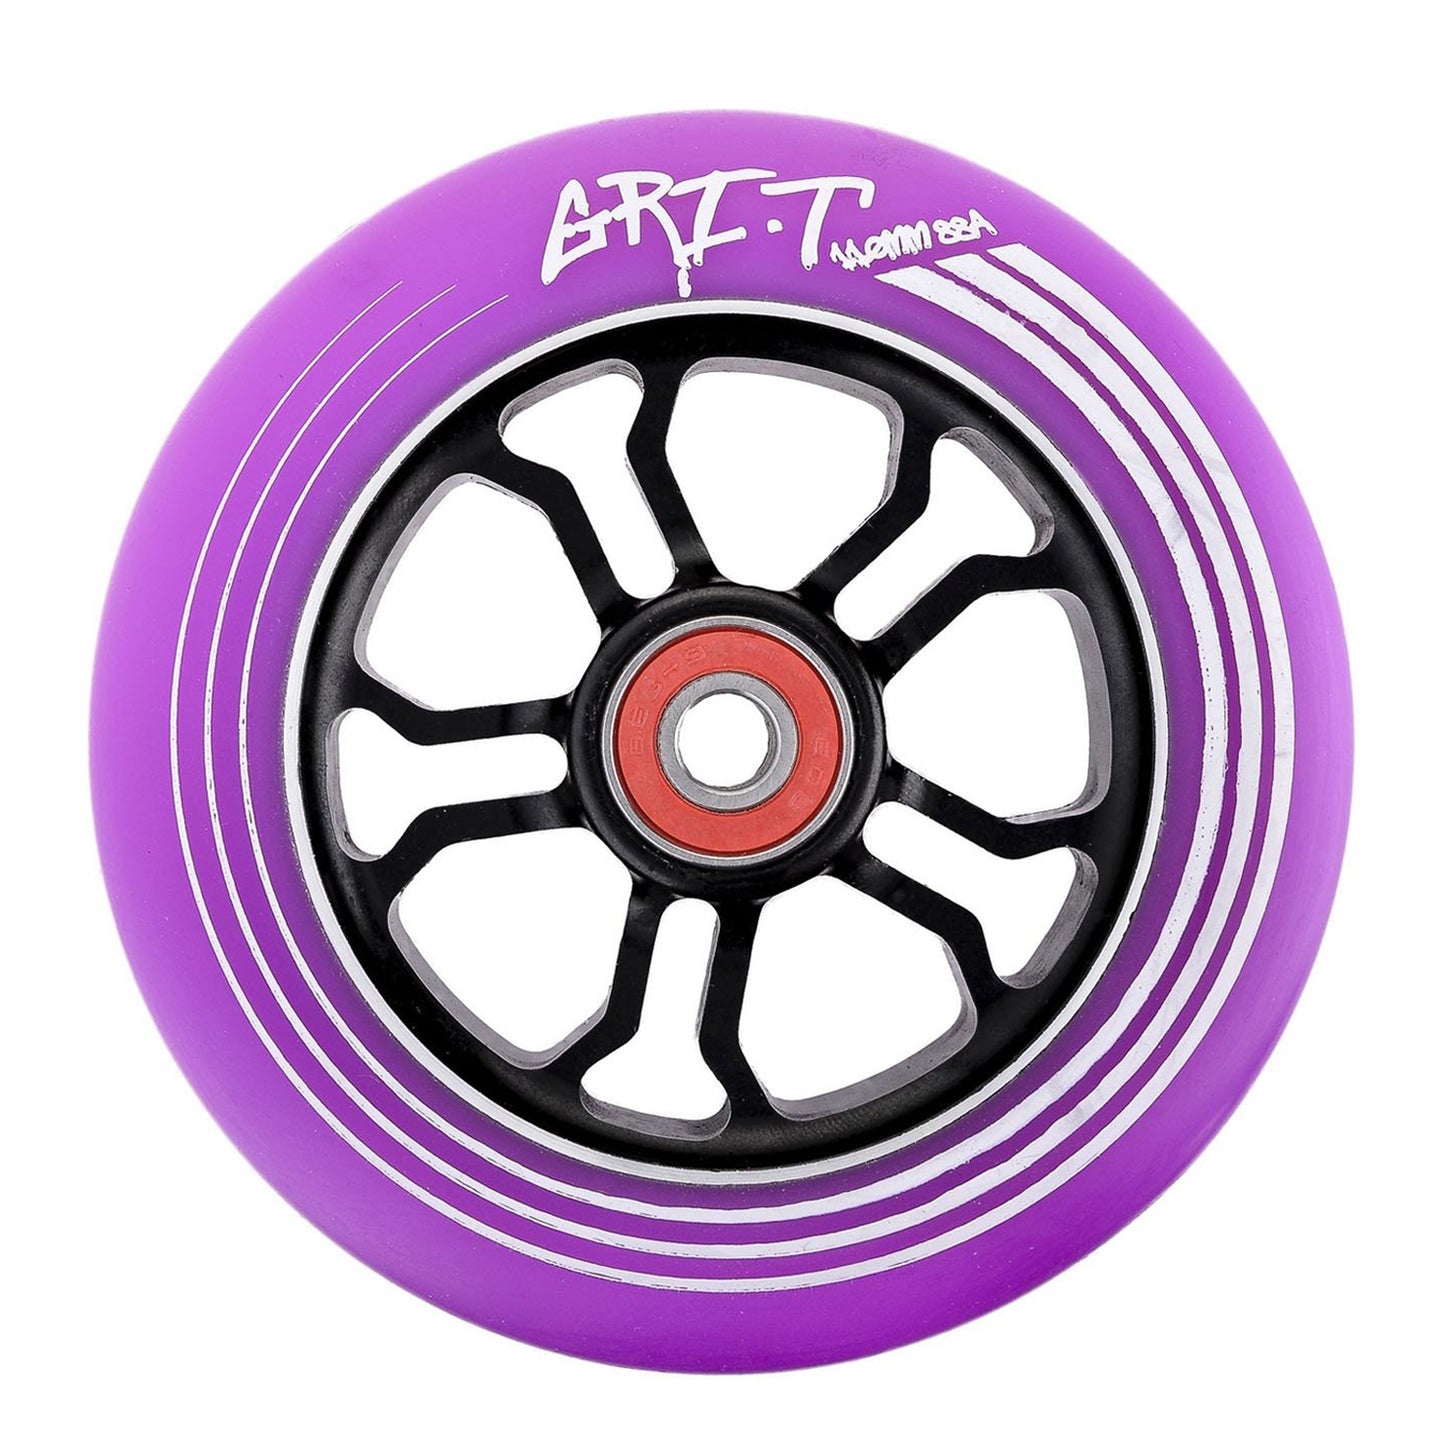 Grit Ultra Light Spoked V2 110mm Scooter Wheel  - Black / Purple - Prime Delux Store